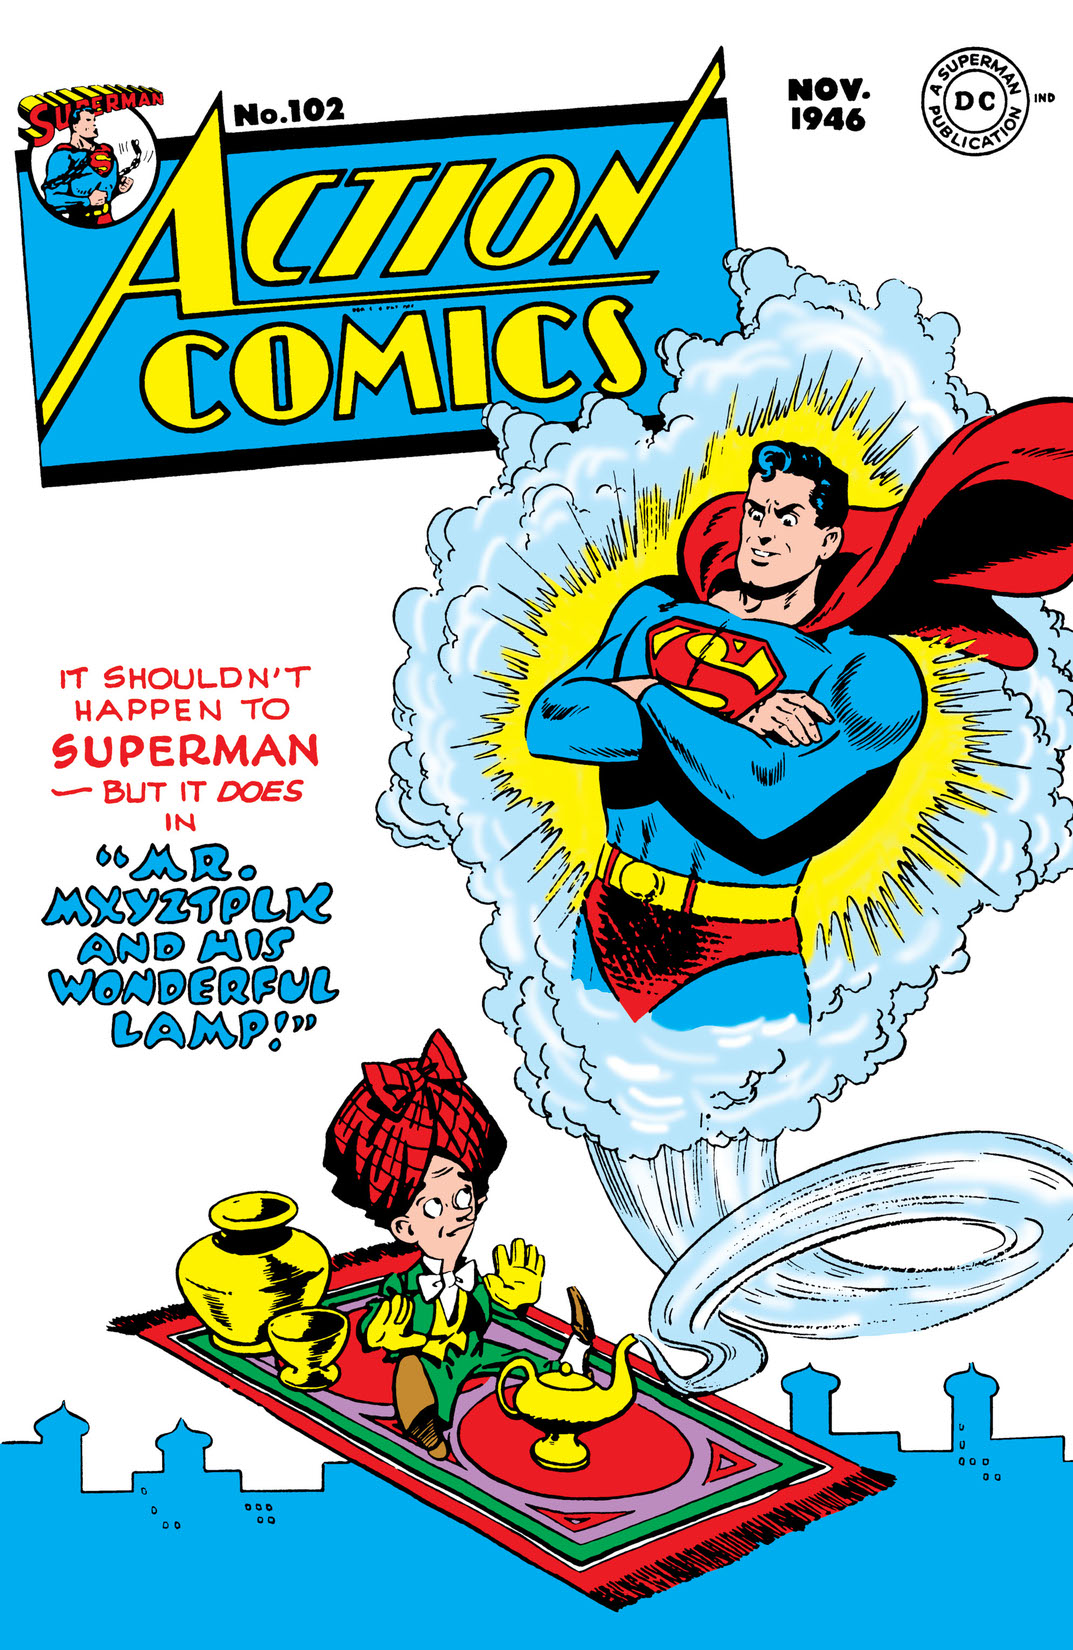 Action Comics (1938-) #102 preview images